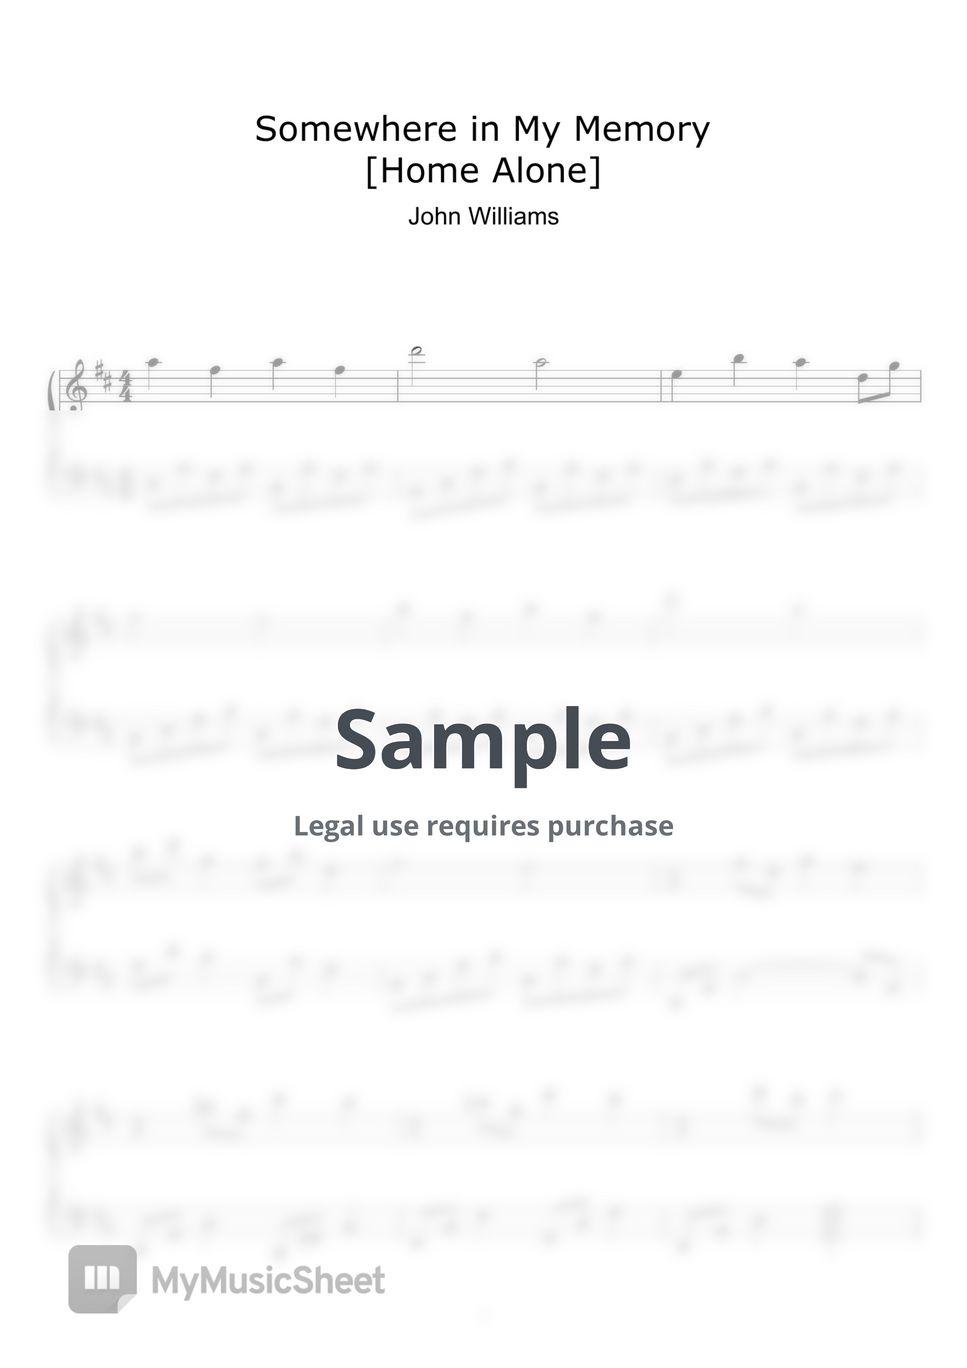 John Williams - Somewhere in My Memory (Home Alone) (Sheet Music, MIDI,) by sayu